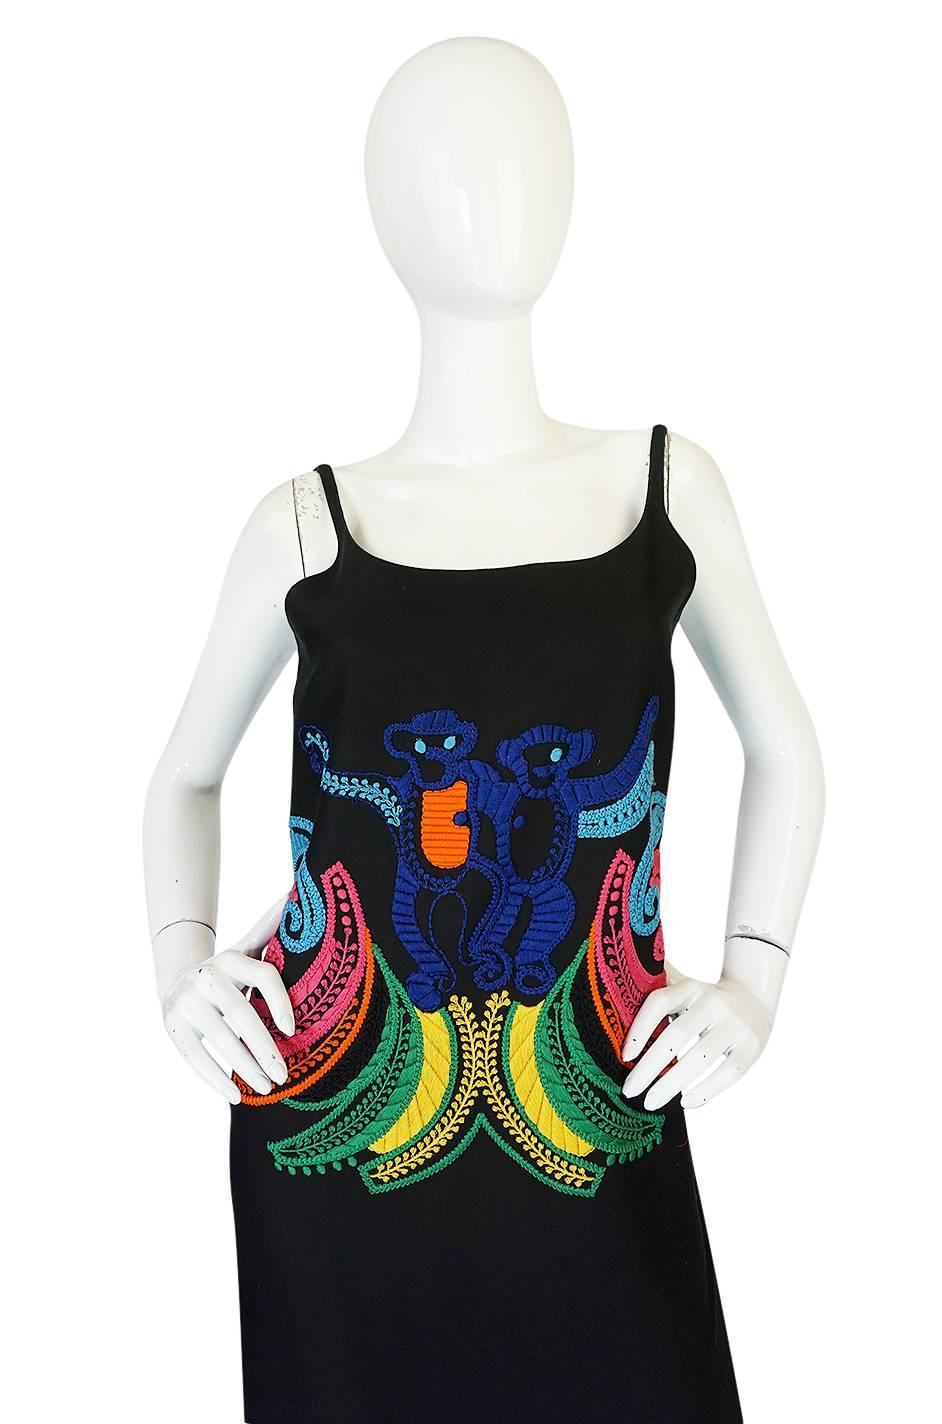 Black Look 29 S/S 2011 Prada Runway Embroidered Monkey Dress